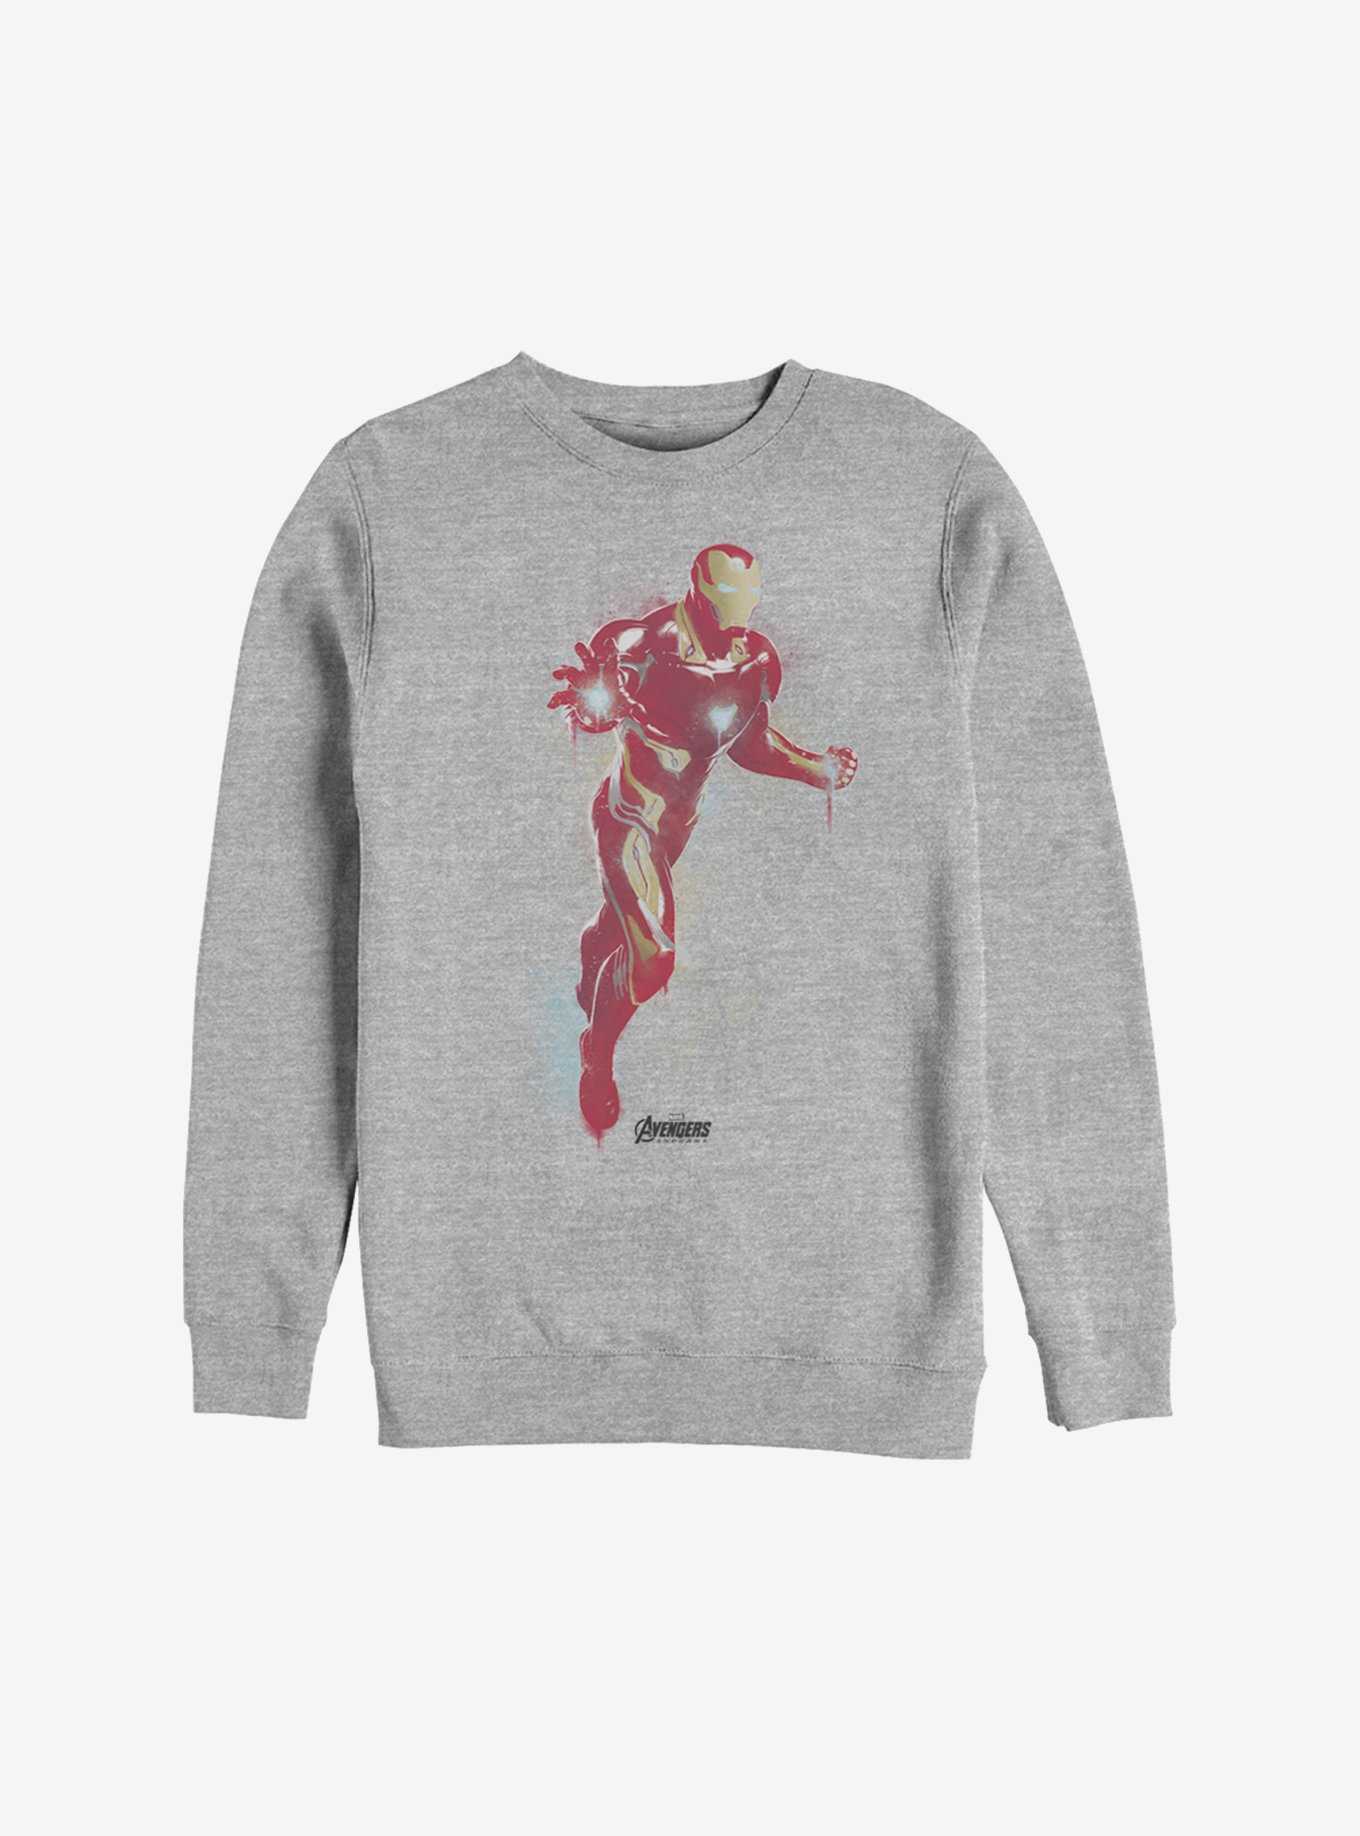 Marvel Iron Man Paint Sweatshirt, , hi-res